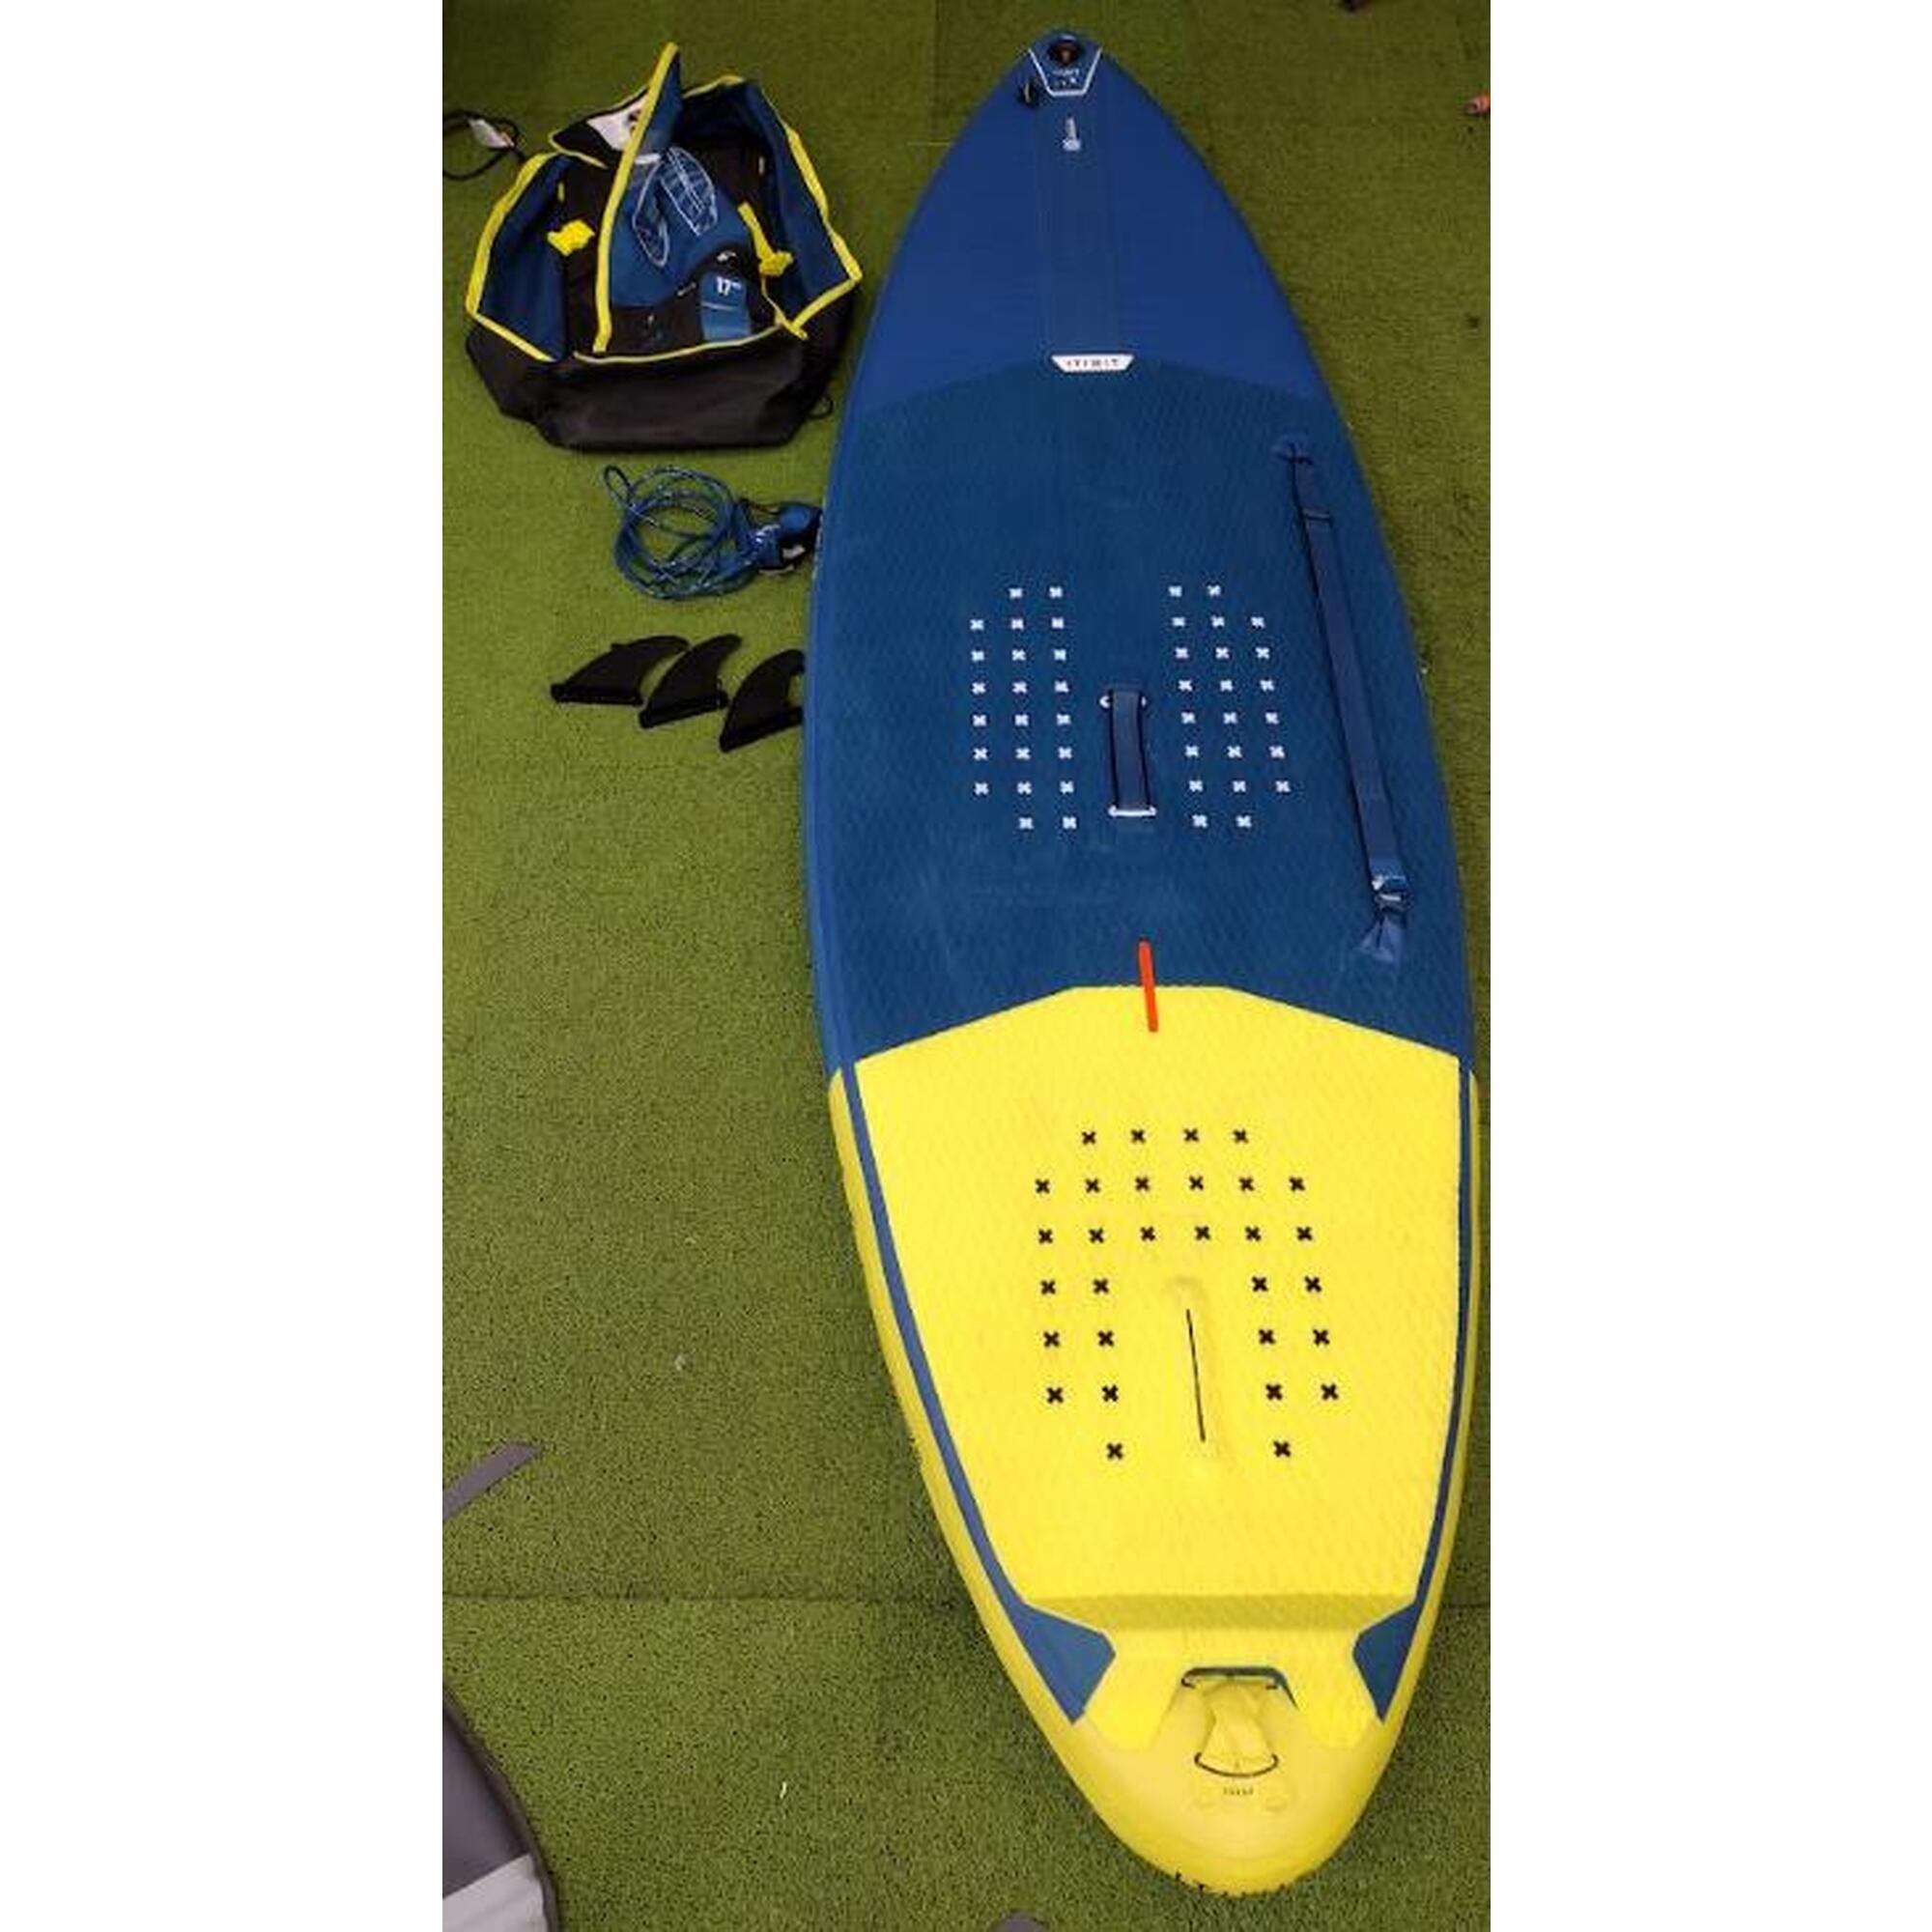 SUP SURF SHORTBOARD 500 9' - SEGUNDA VIDA: EXCELENTE